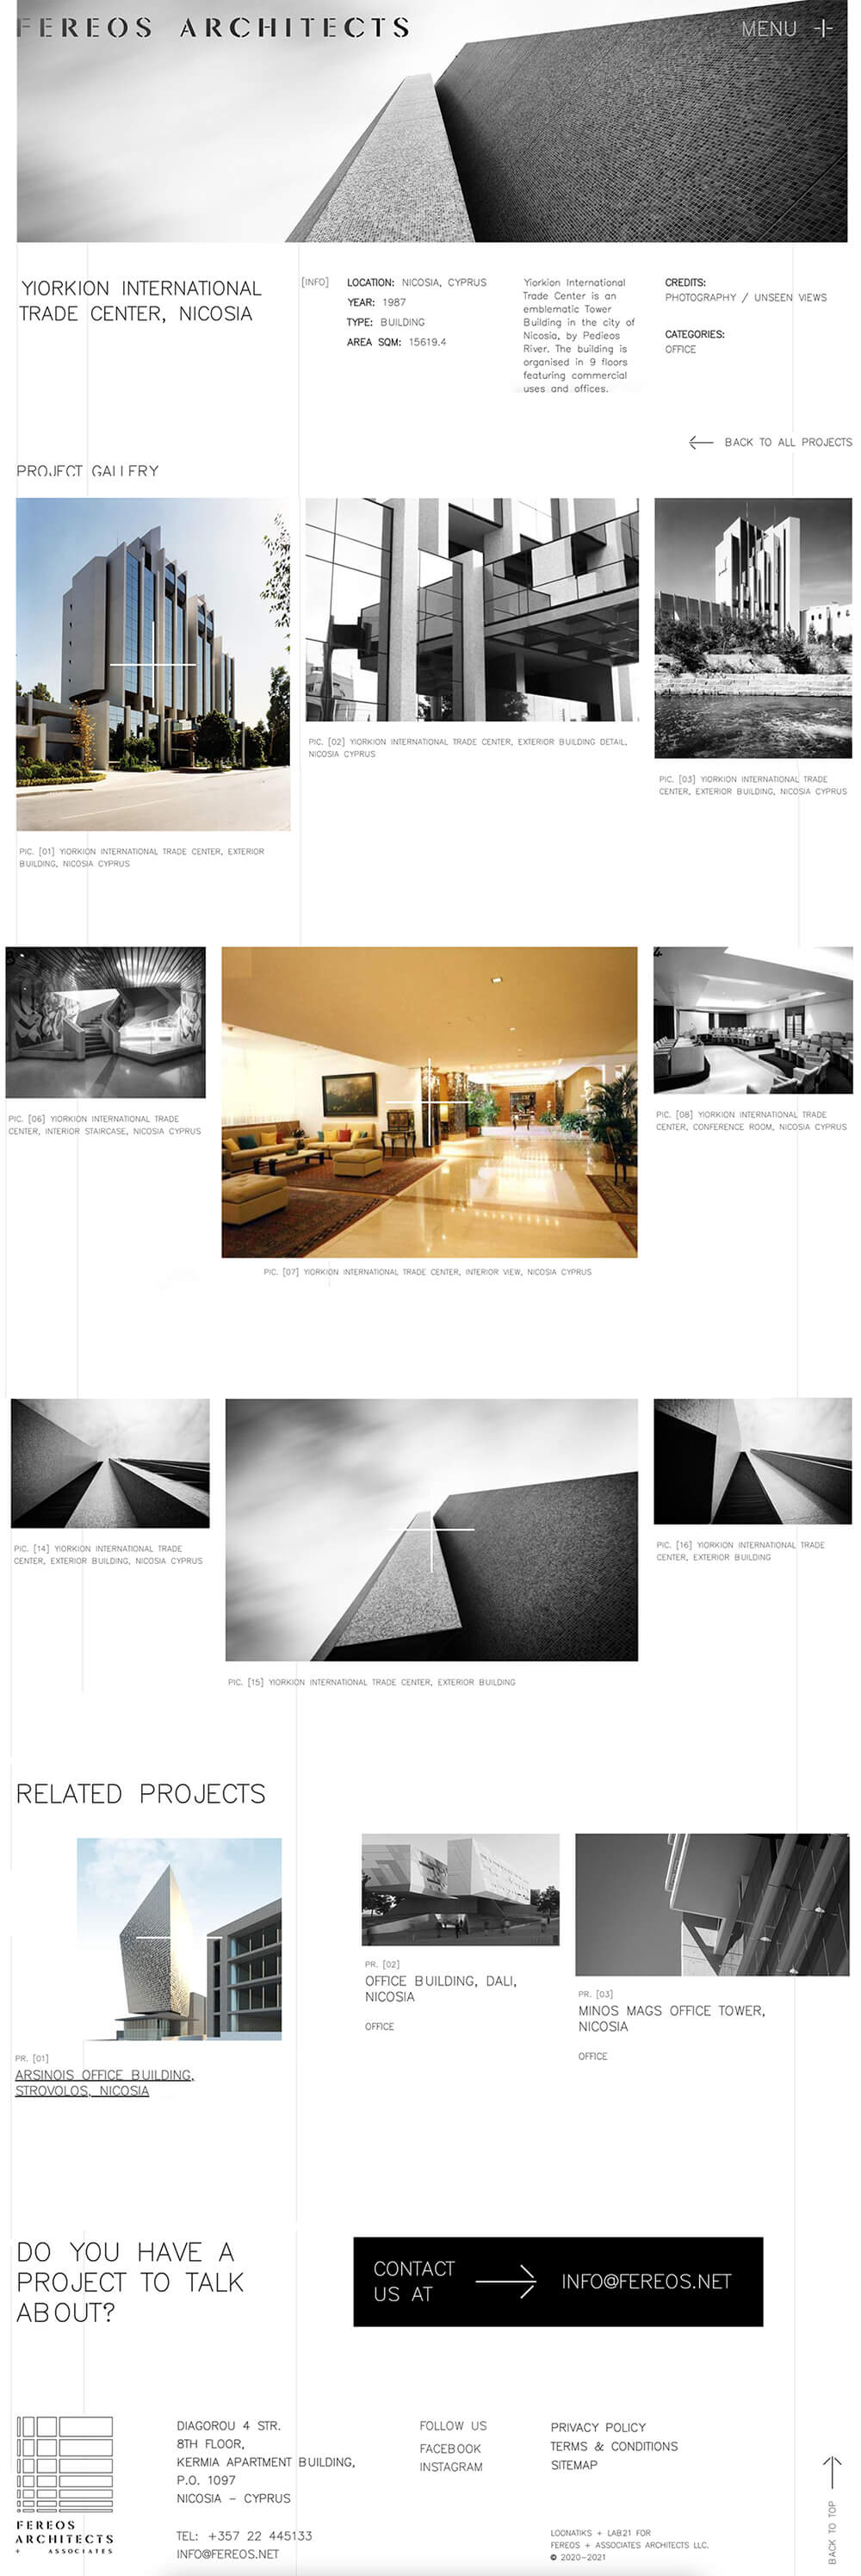 Lab21 Web Development Studio-Fereos Architects